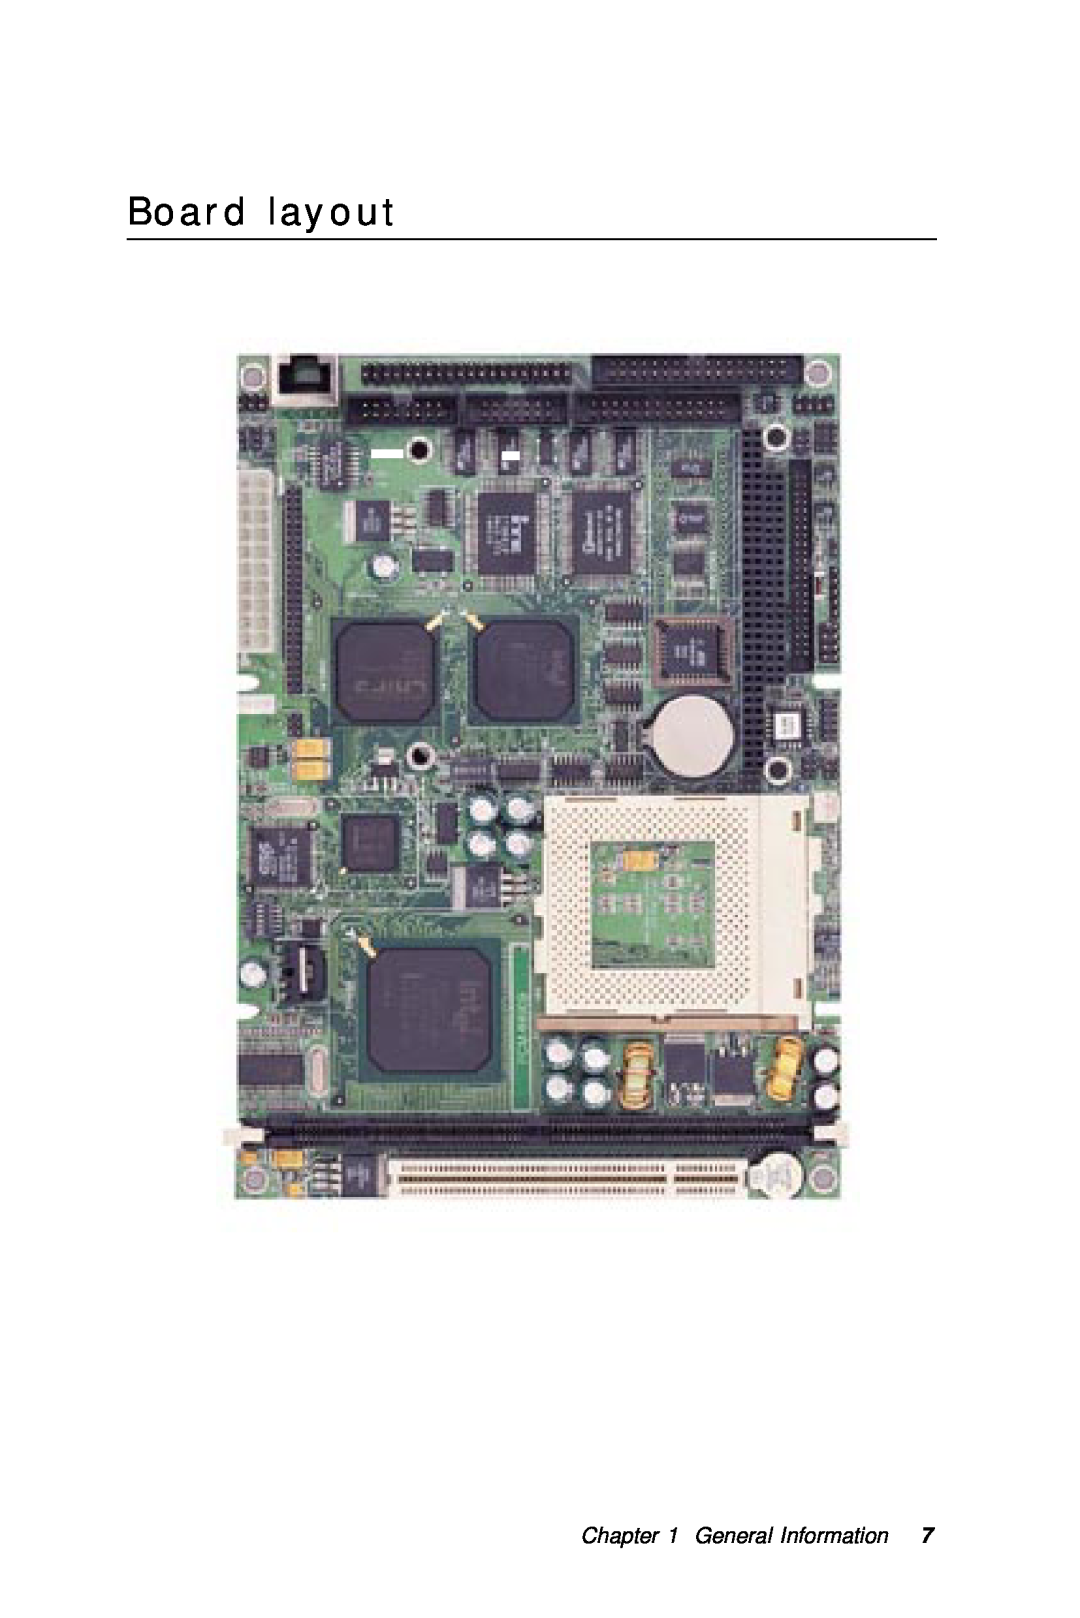 IBM All-in-One FC/Socket 370 Celeron, PCM-6890B manual Board layout, General Information 